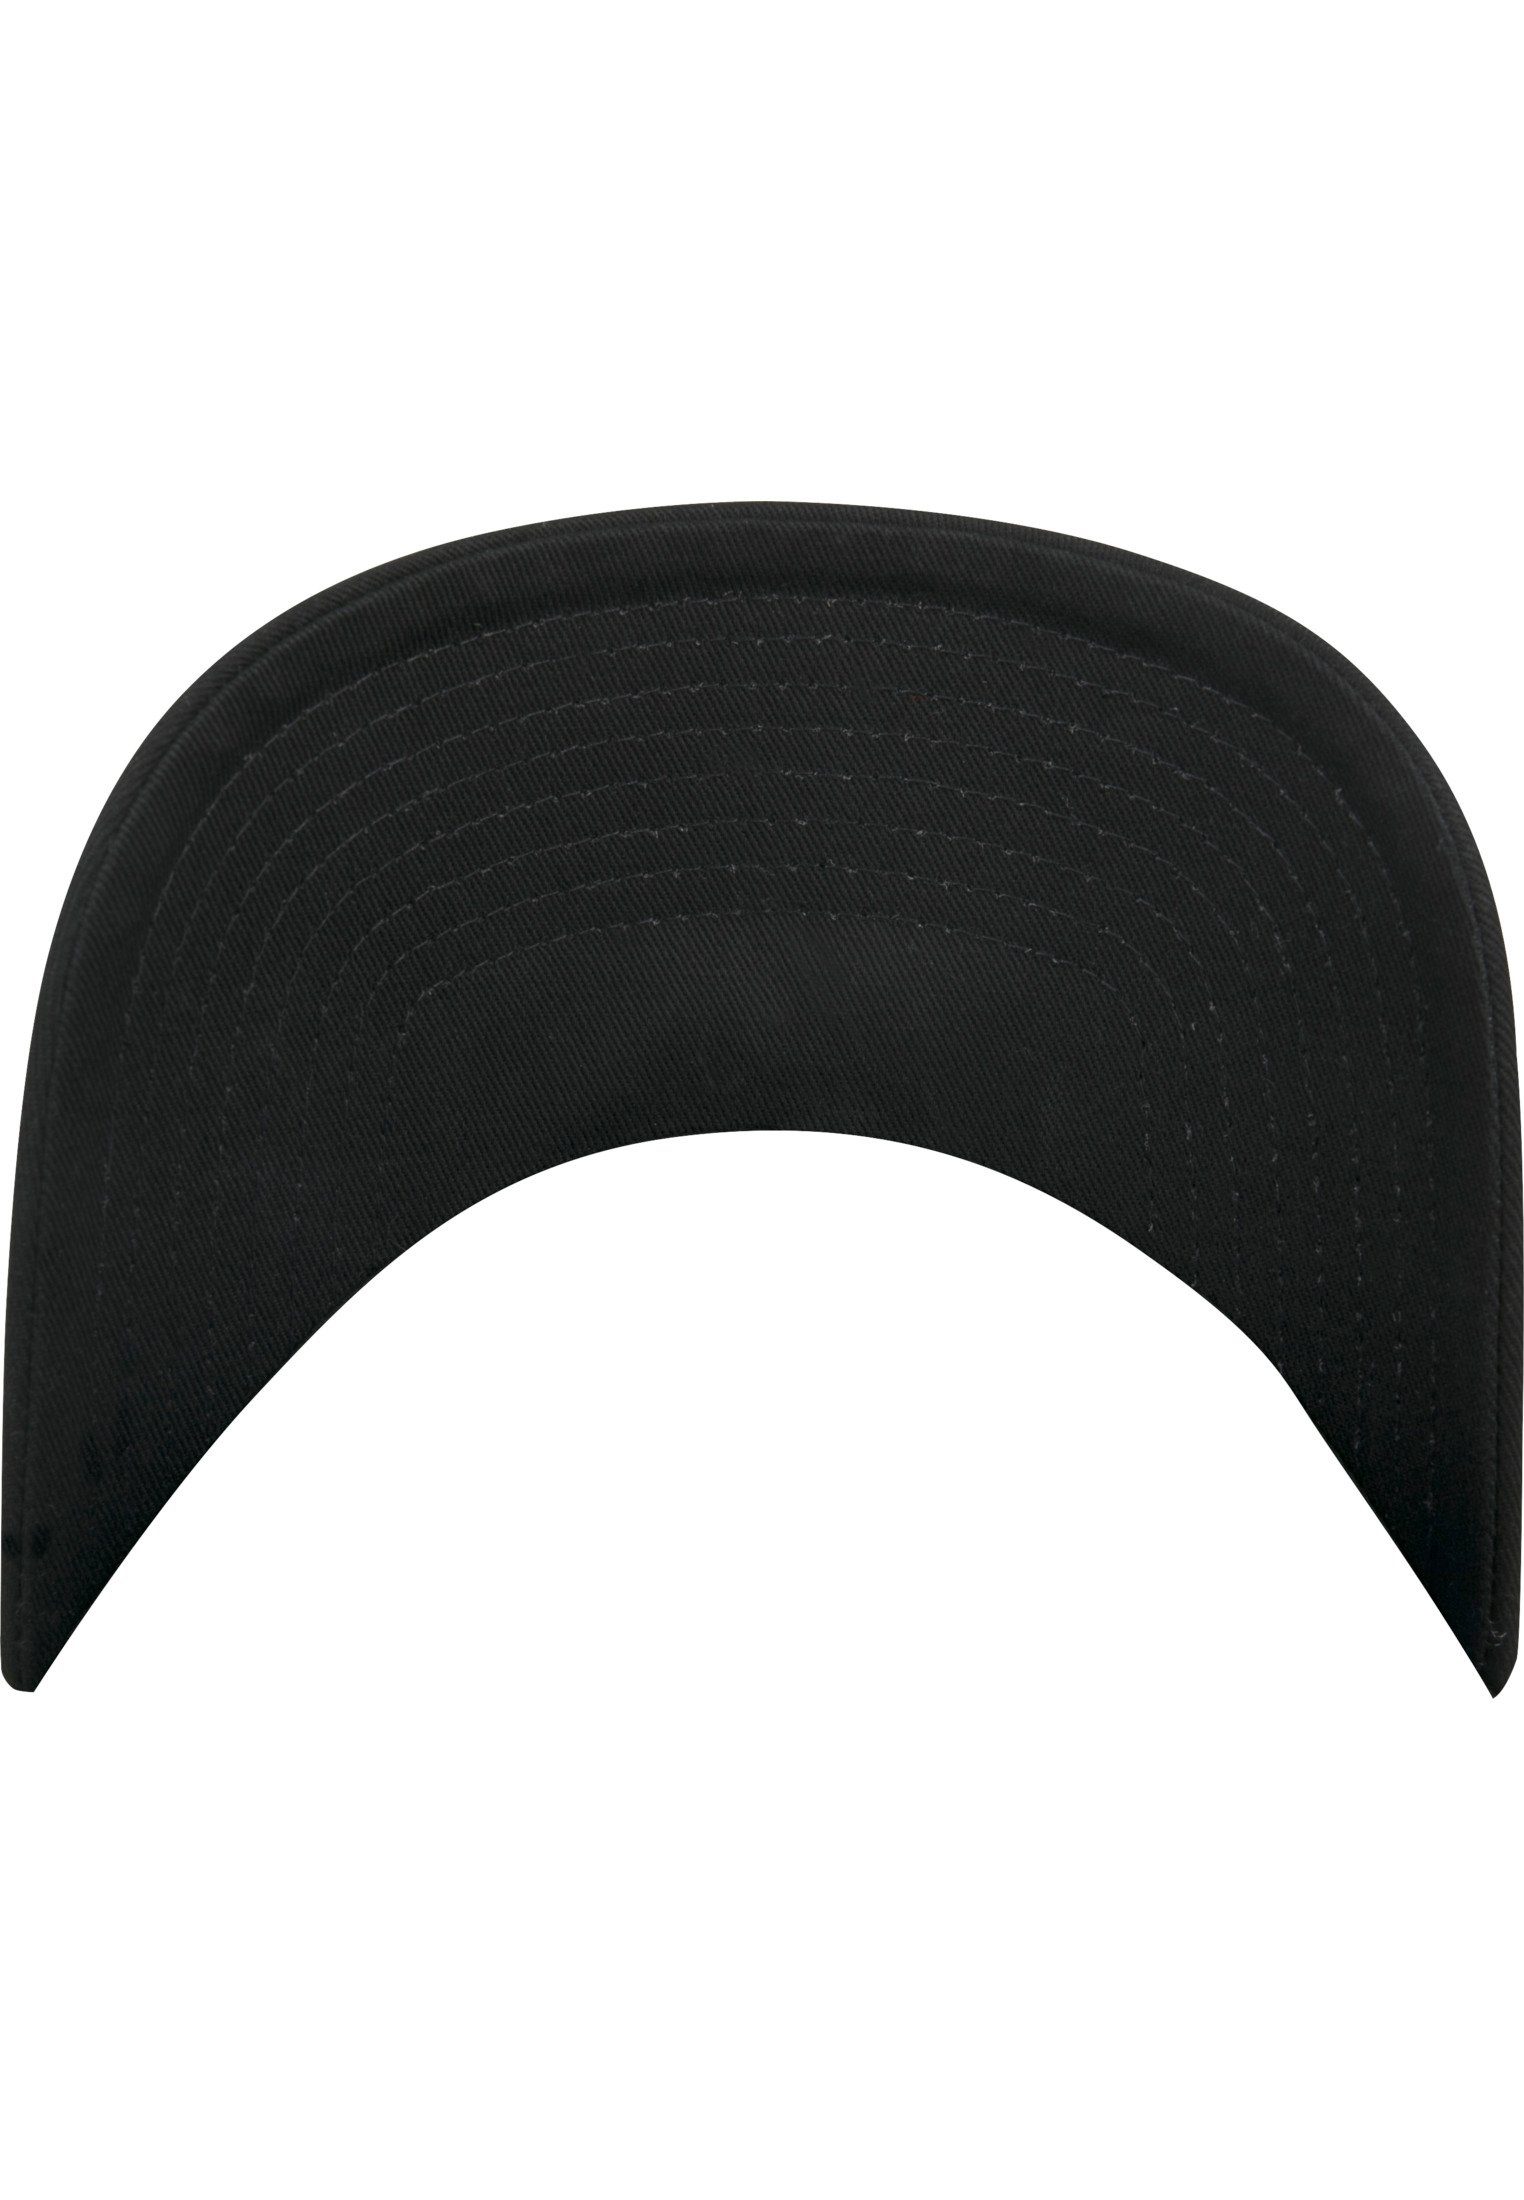 Black 5-Panel Flexfit Classic Flex Cap 7707 Flexfit Snapback Curved